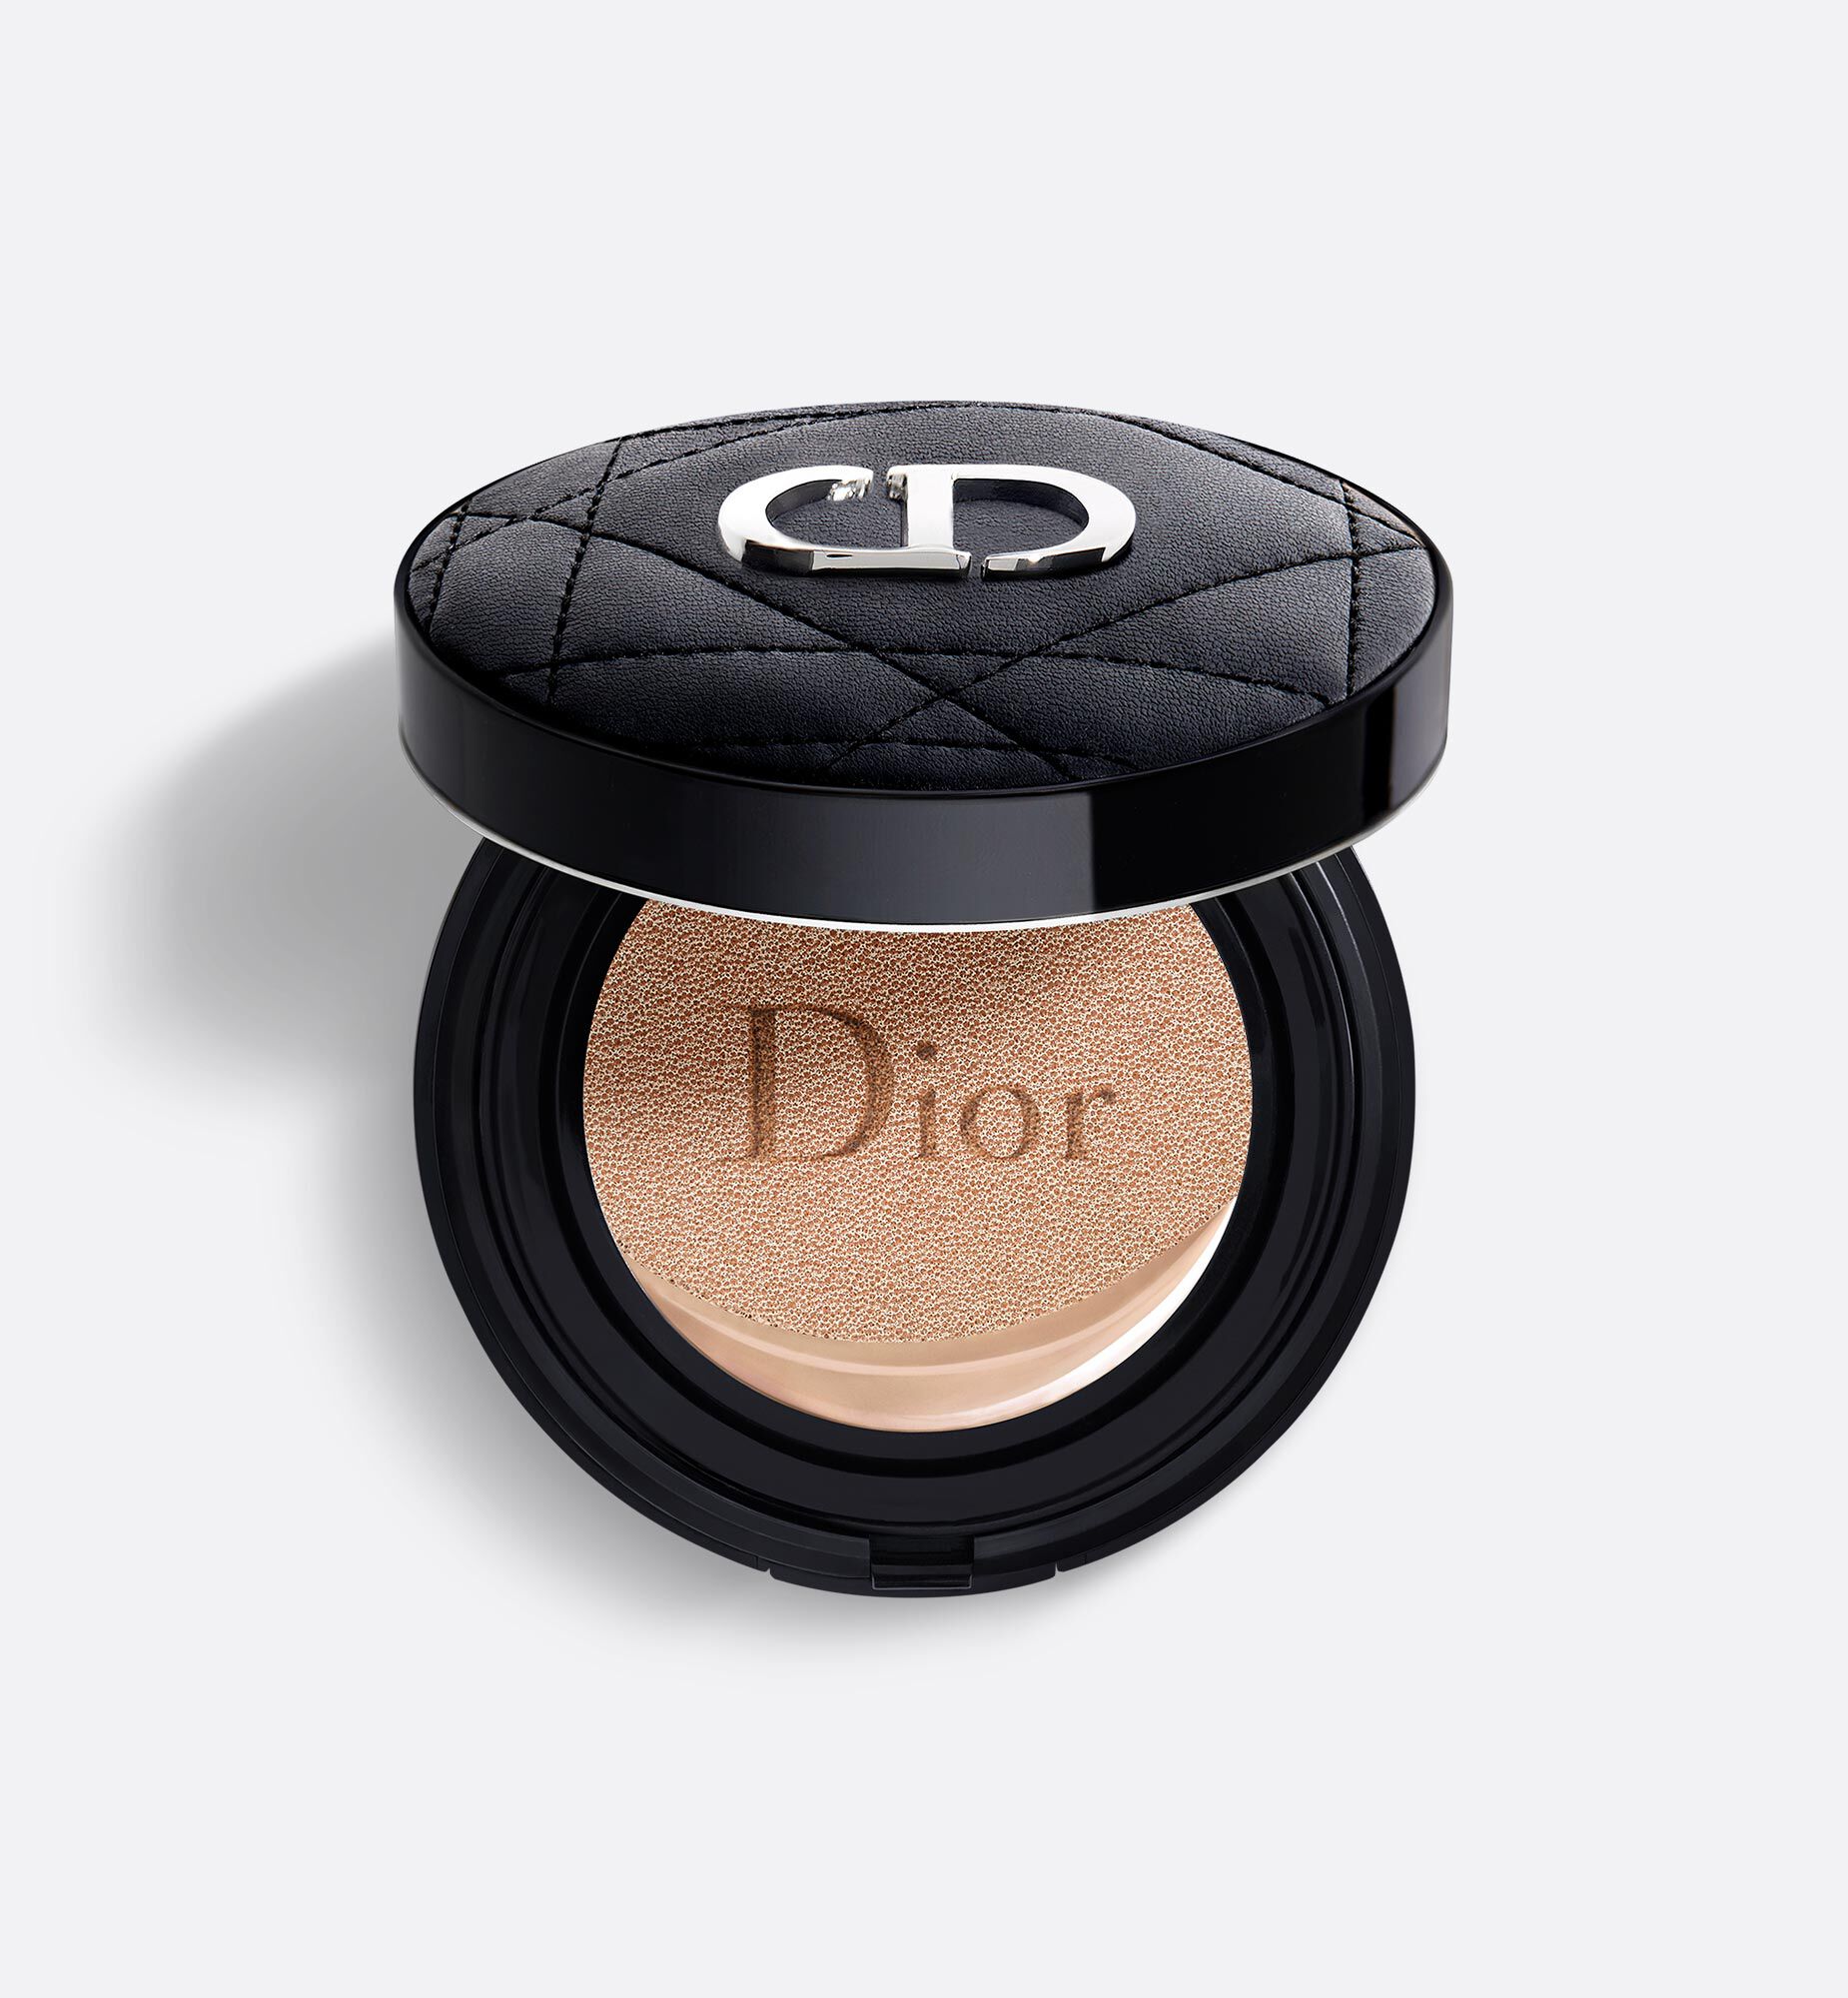 Phấn Nước Dior Capture Totale Dreamskin Perfect Skin Cushion  Mỹ phẩm  chính hãng